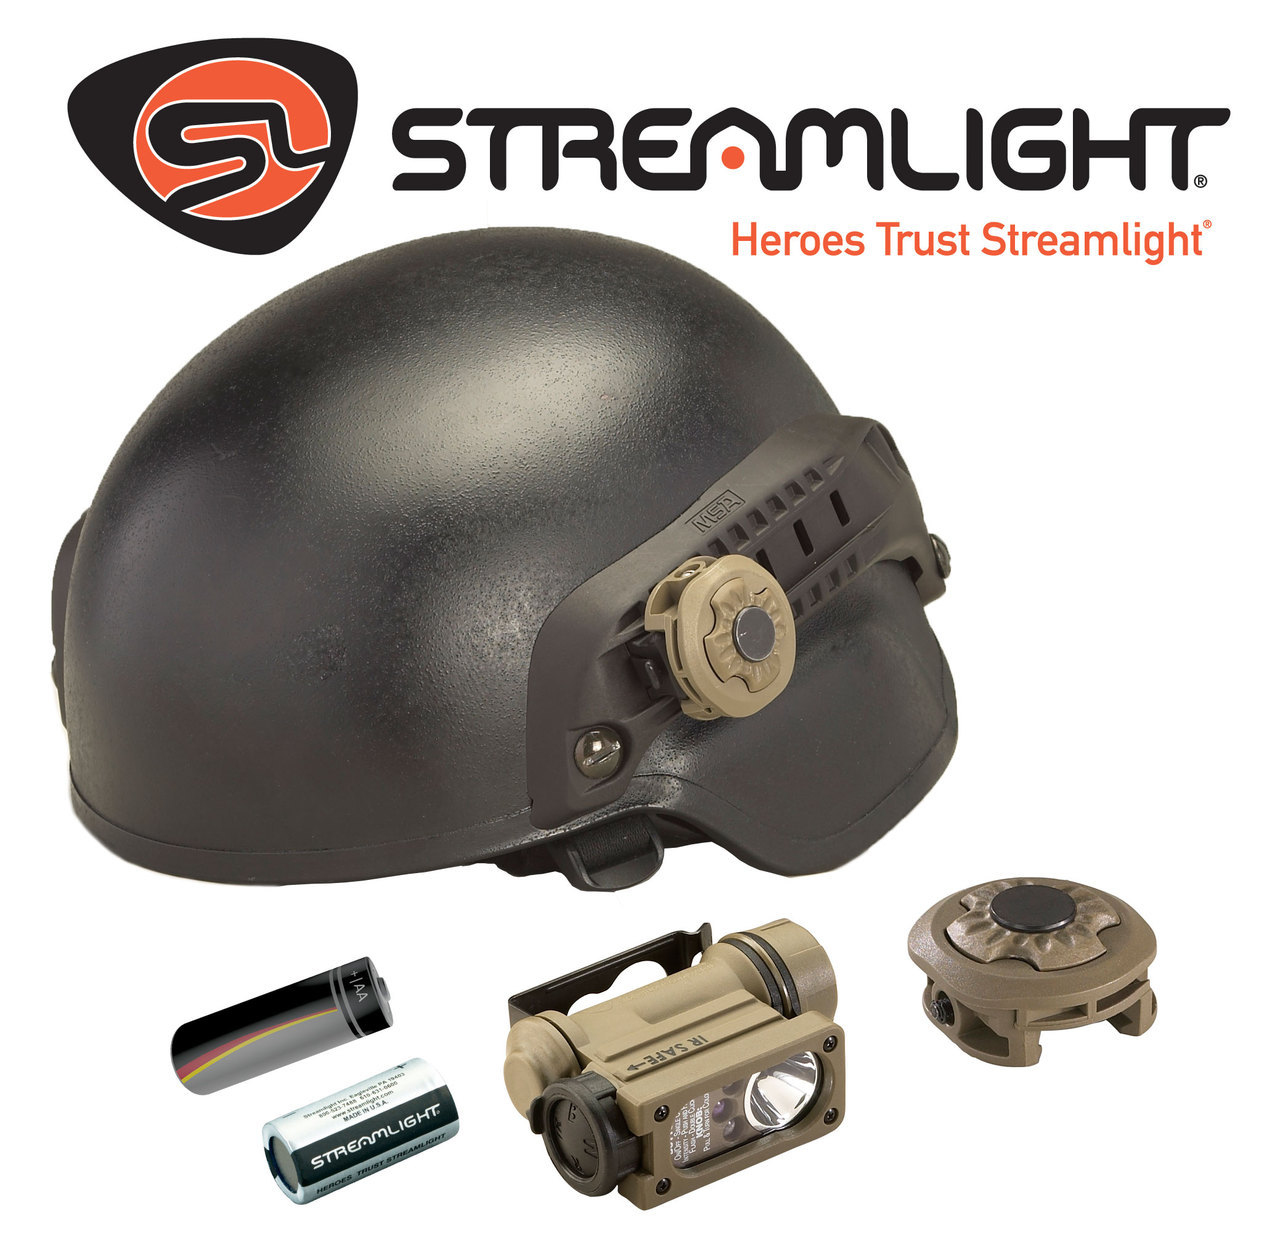 Streamlight Sidewinder Compact II Mil-Spec w/Helmet Rail Adapter - $59.95 | gun.deals